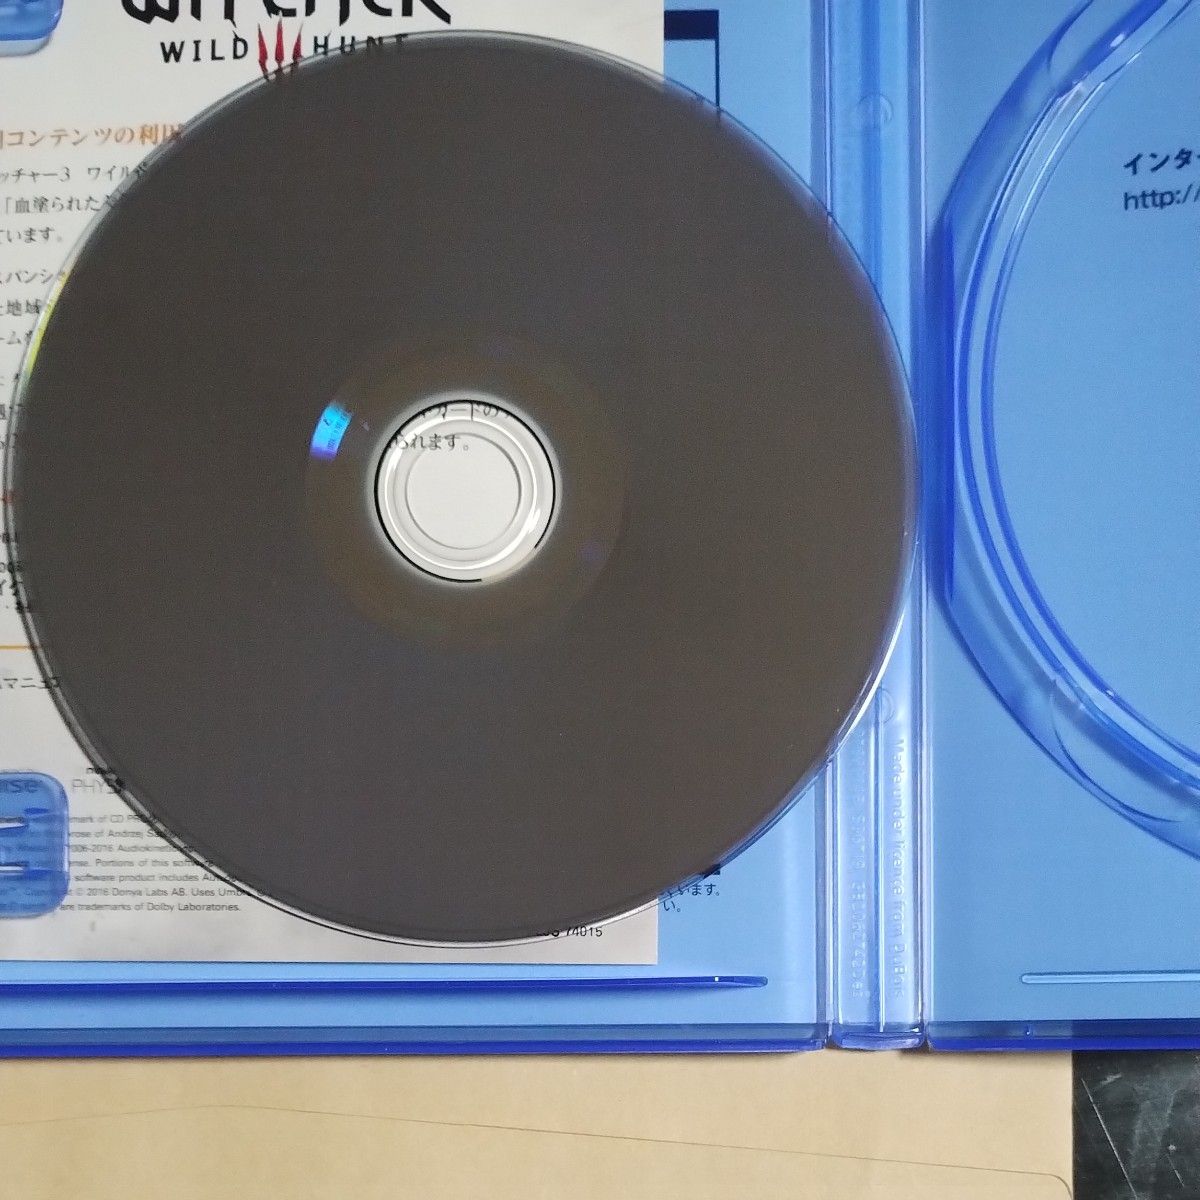 PS 4 ウィッチャー3 ワイルドハント ゲームオブザイヤーエディション